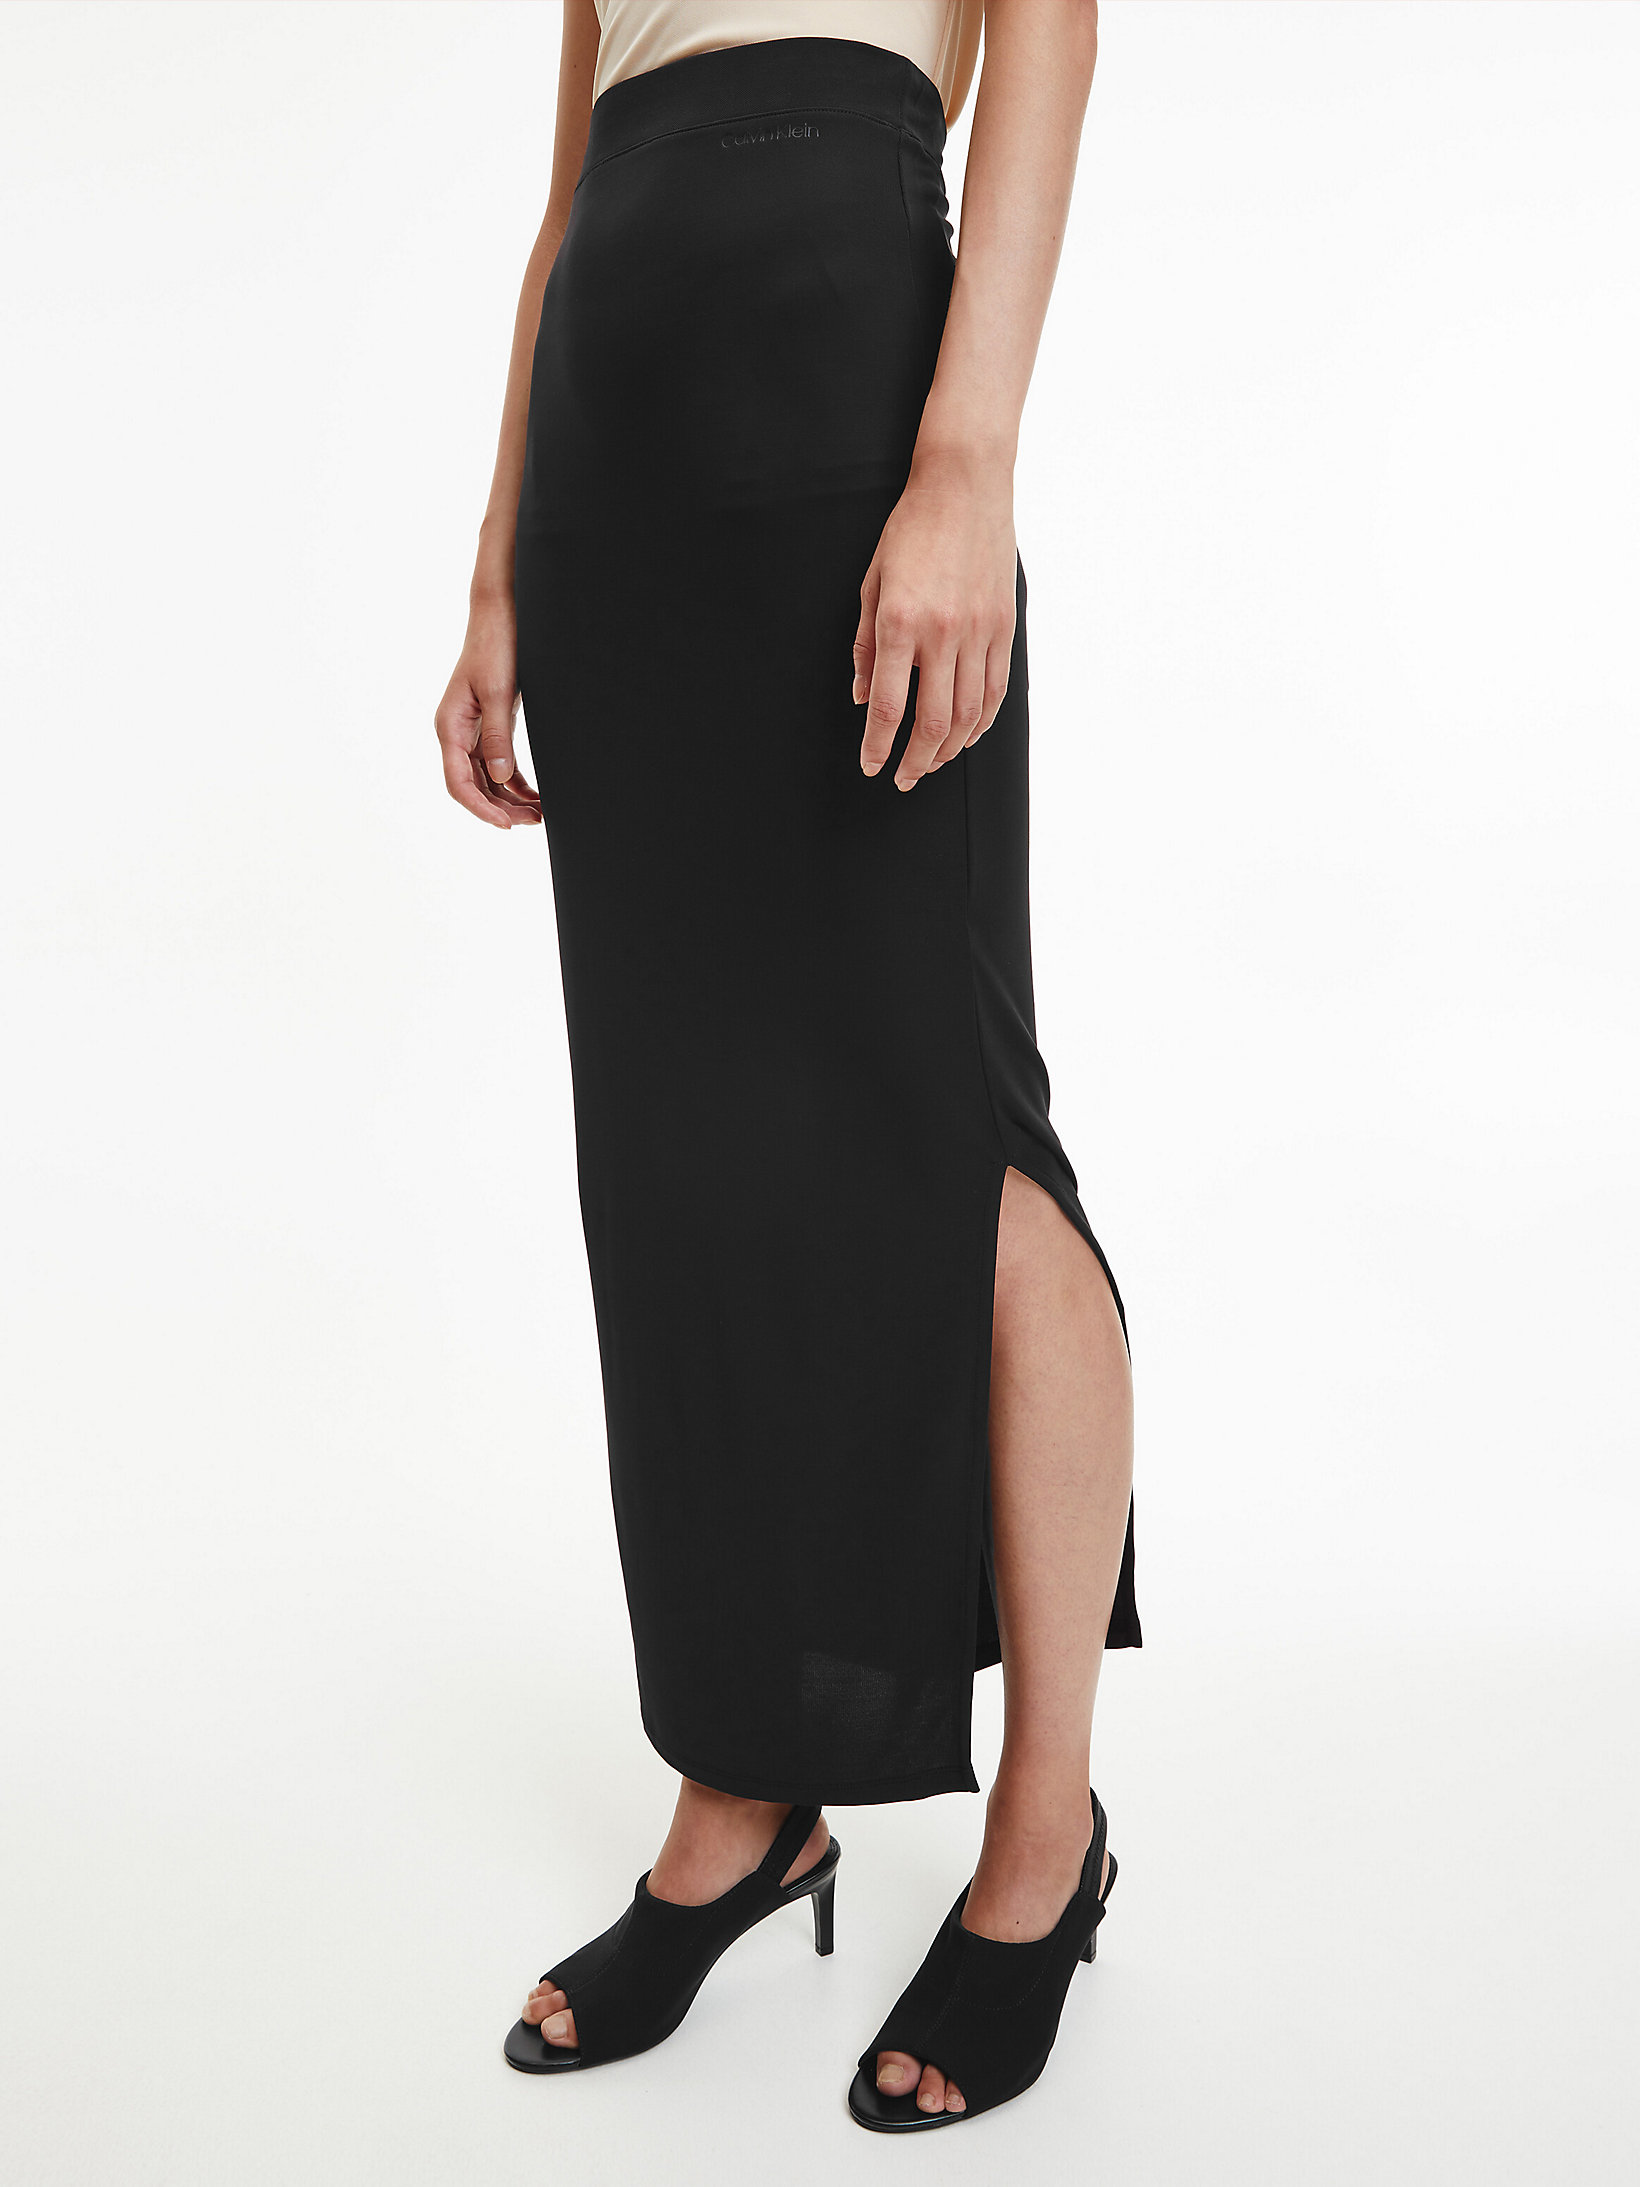 CK Black Viscose Crepe Maxi Skirt undefined women Calvin Klein